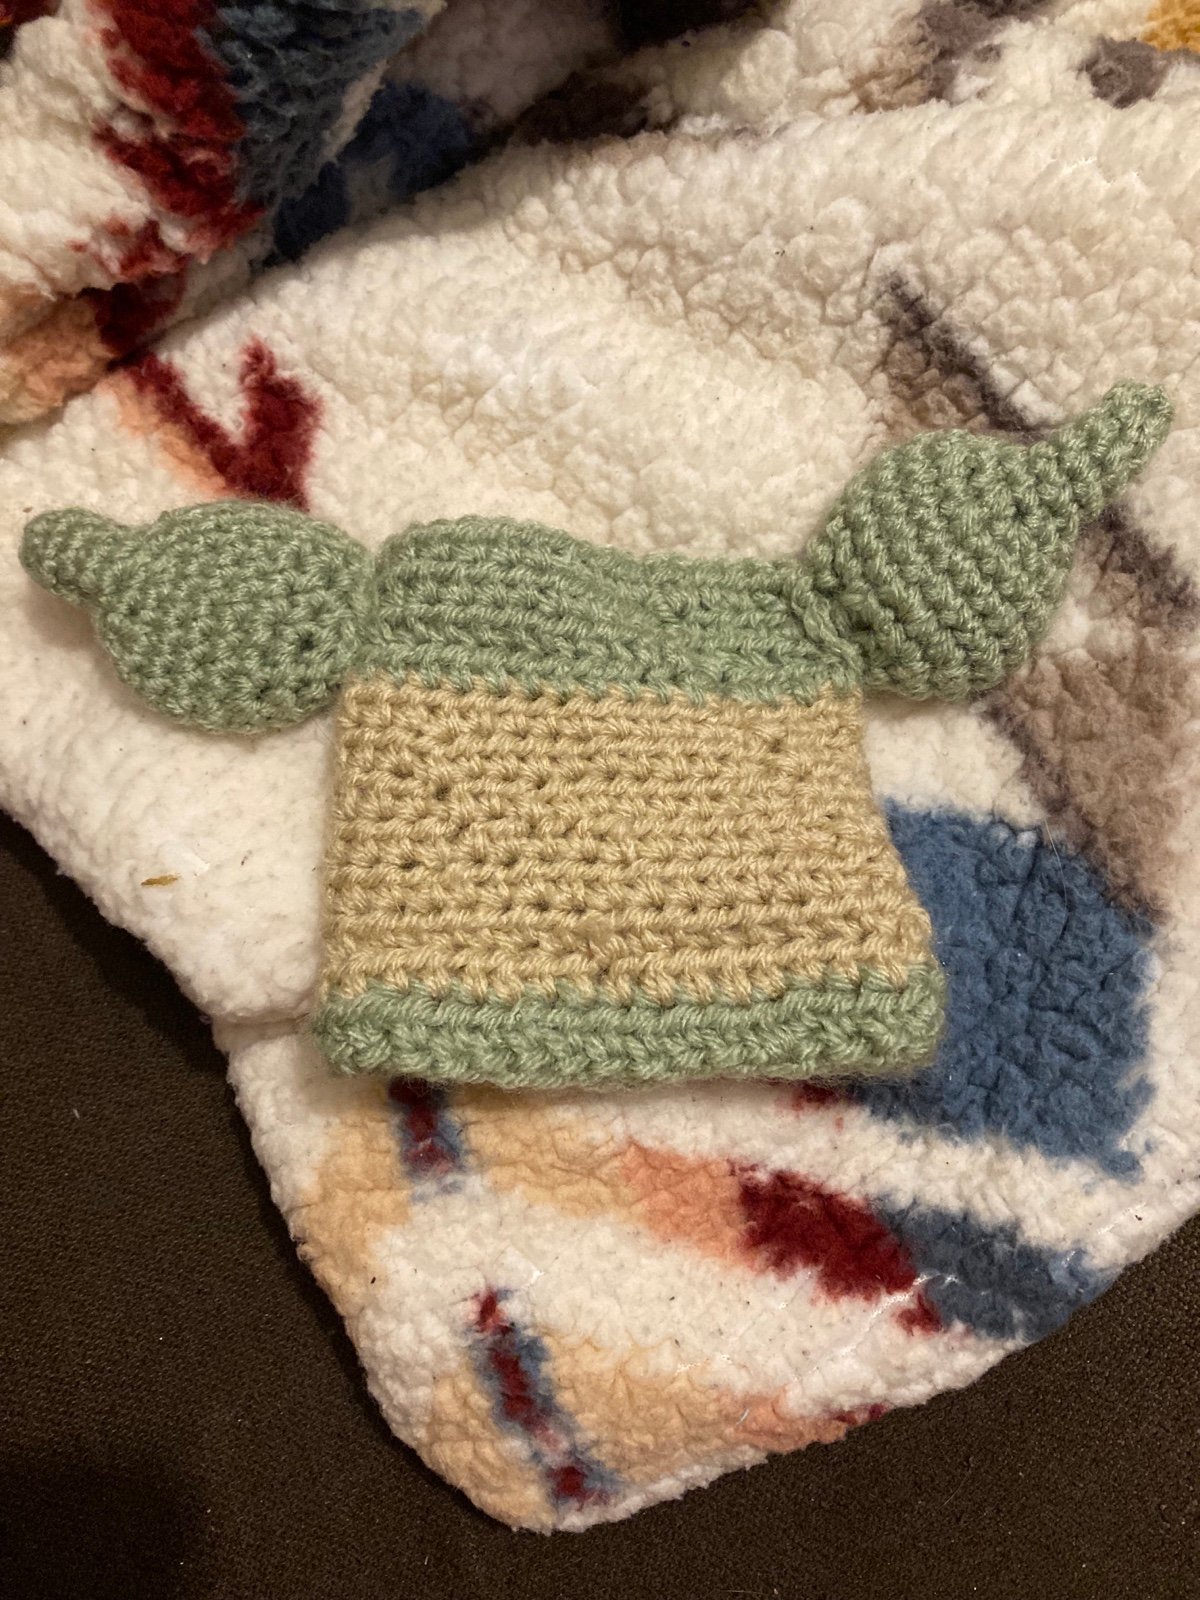 Crochet baby yoda can cozy lu3ojUhvj